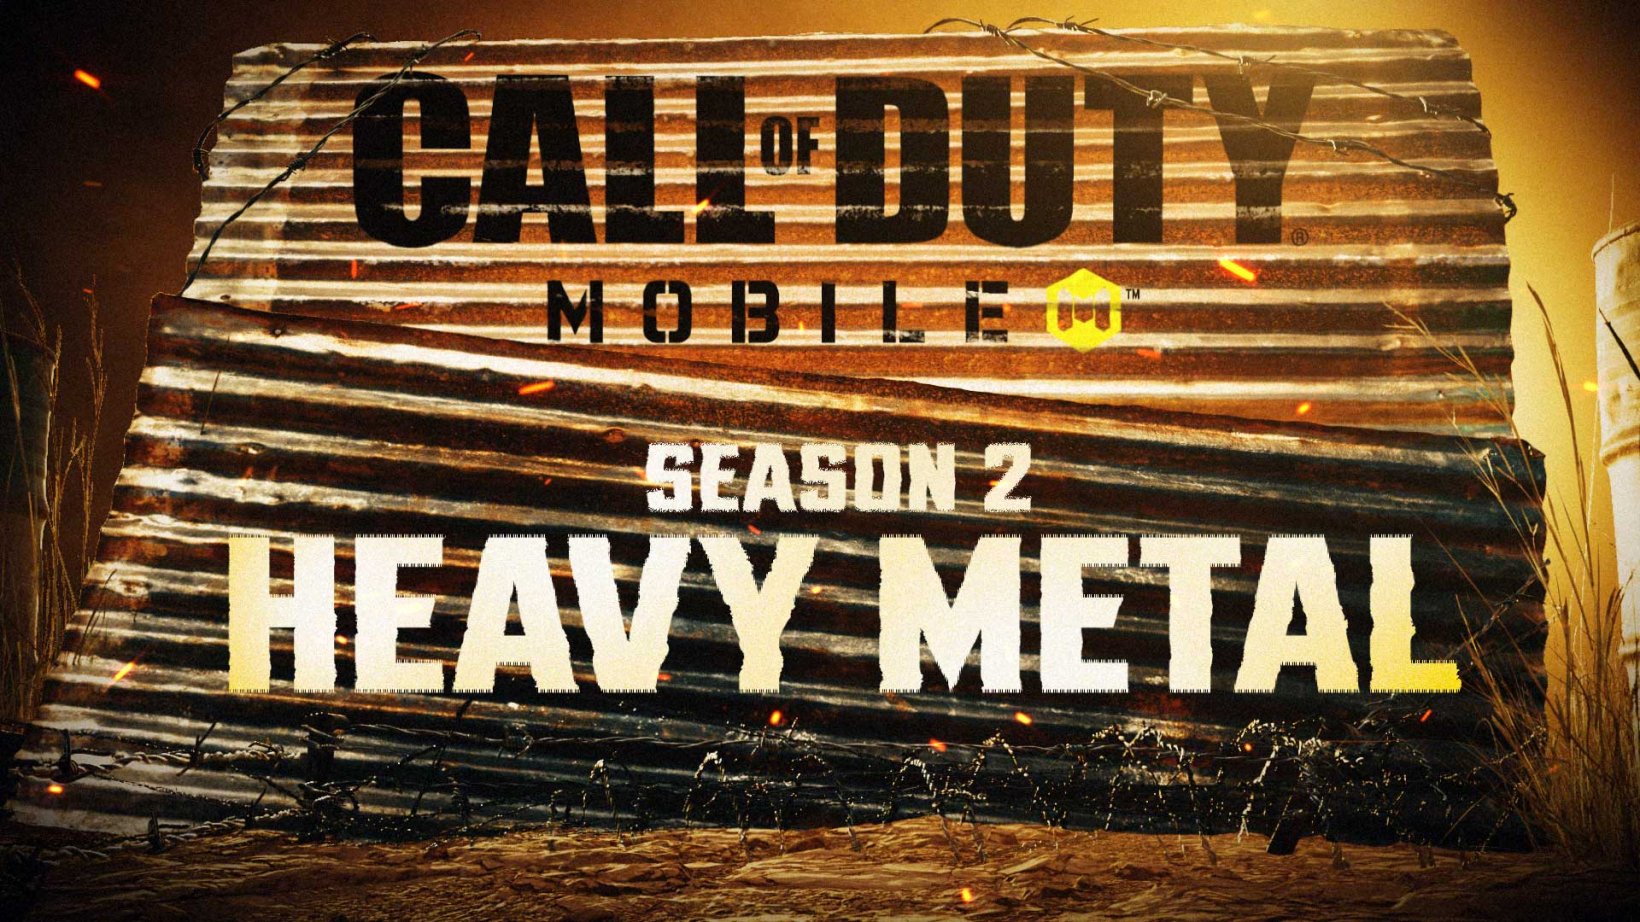 Call of Duty Mobile is launching Season 2: Heavy Metal next week